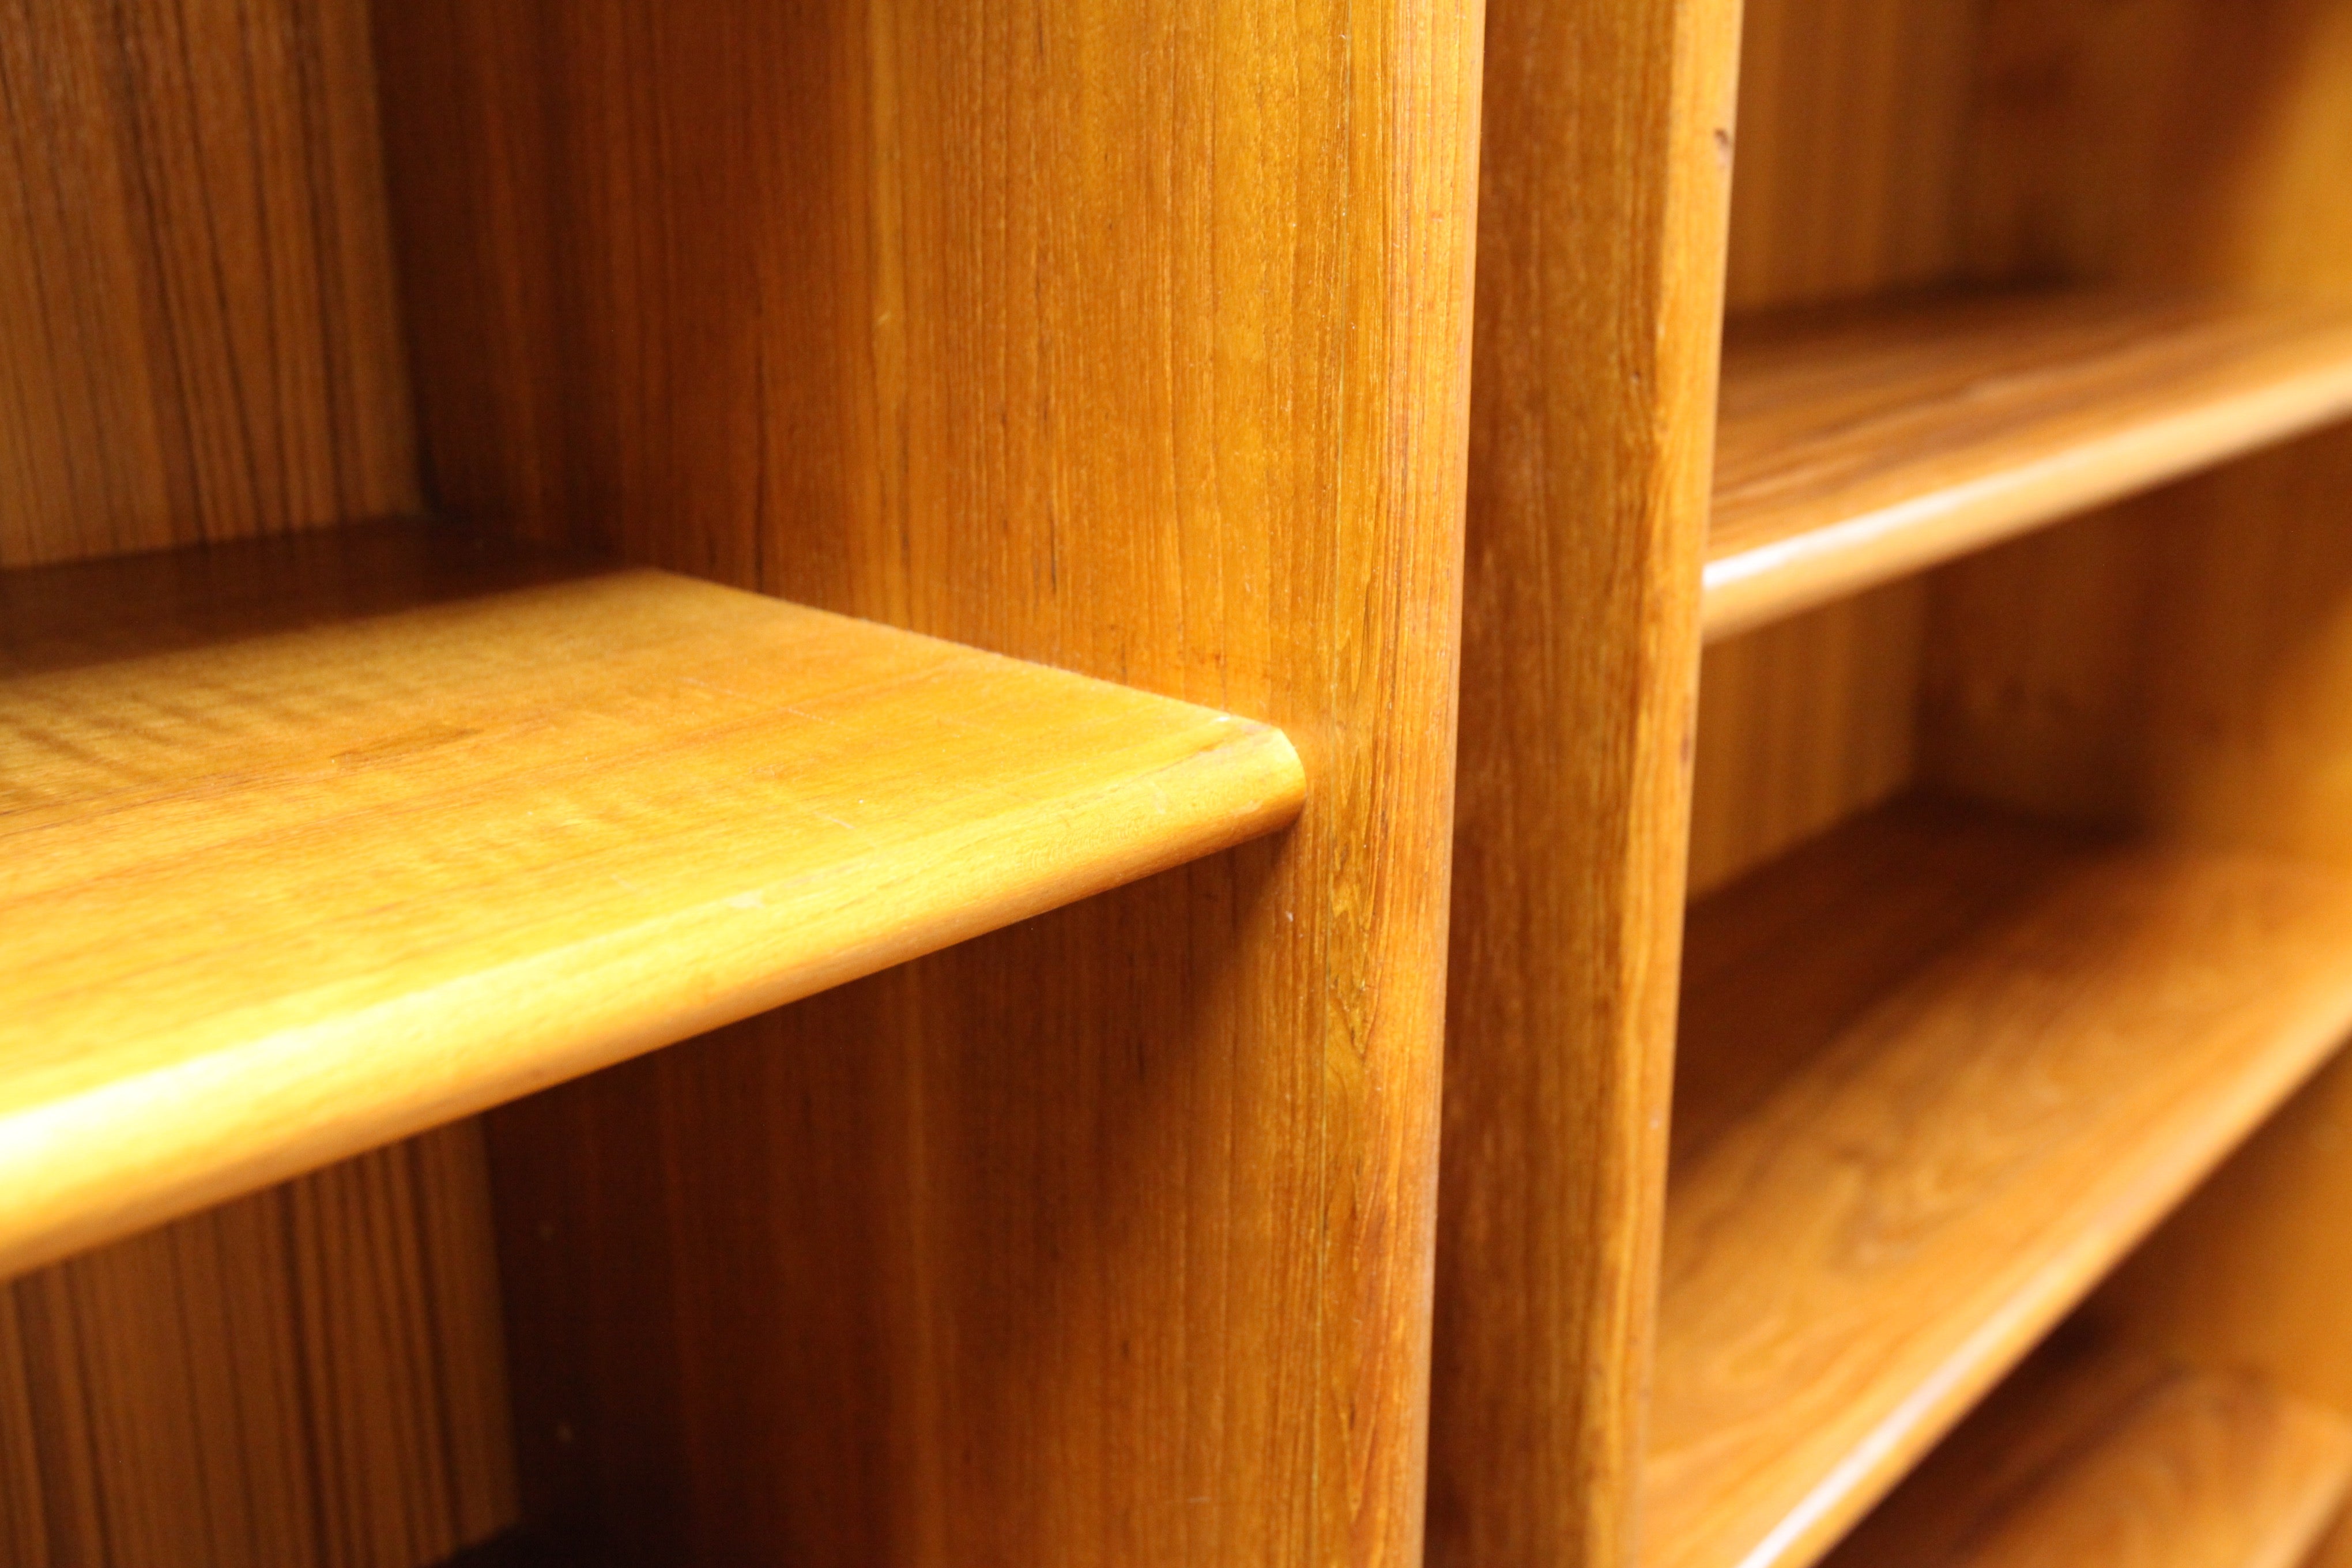 Tall Teak Book Shelf (78.5"H x 32.5"W x 12.5"D)